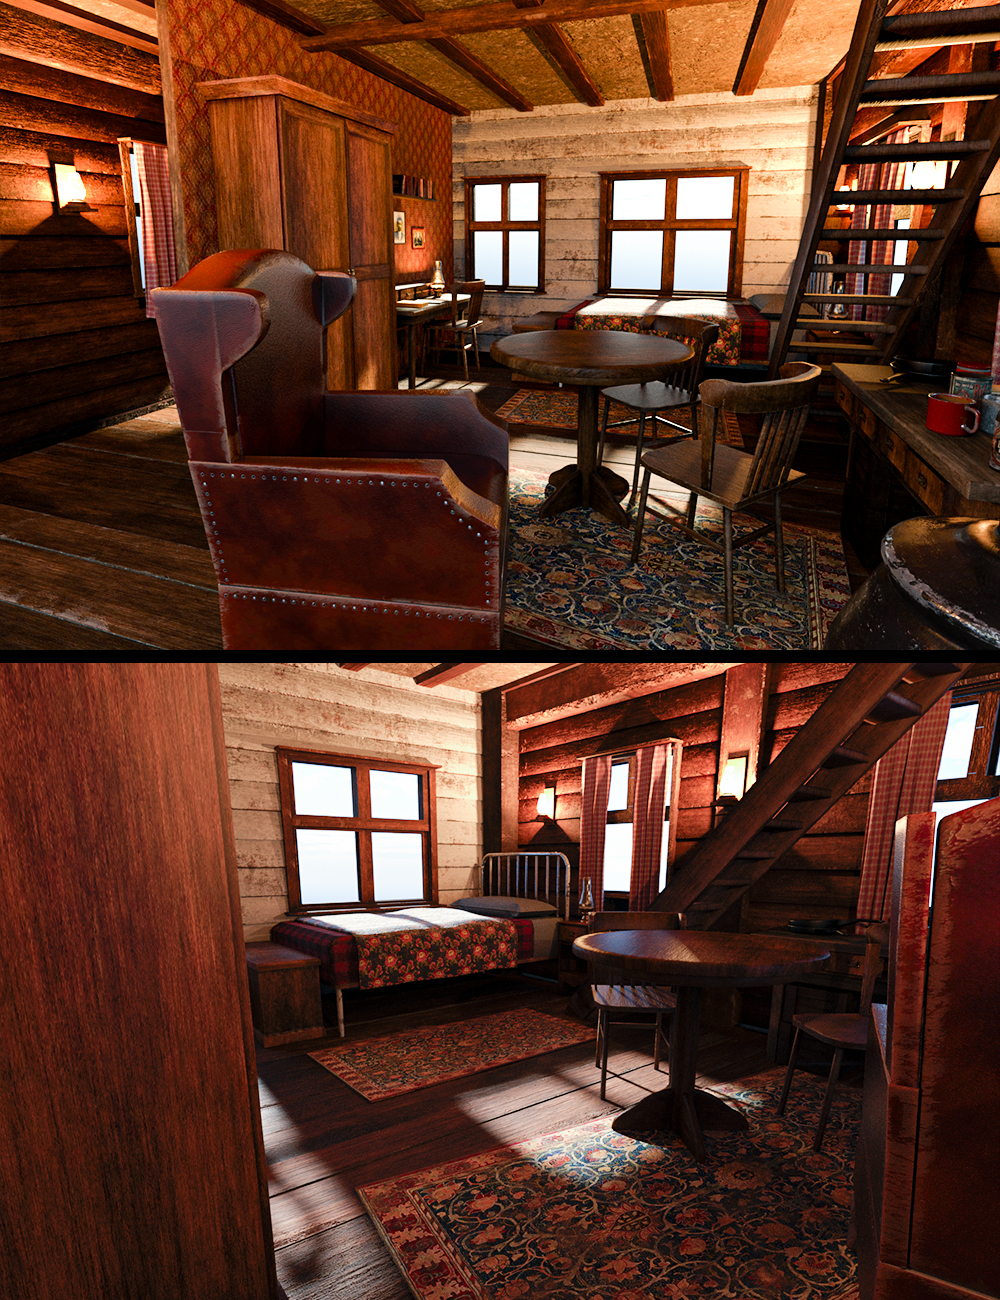 M3D Western General Store Room Interior by: Matari3D, 3D Models by Daz 3D